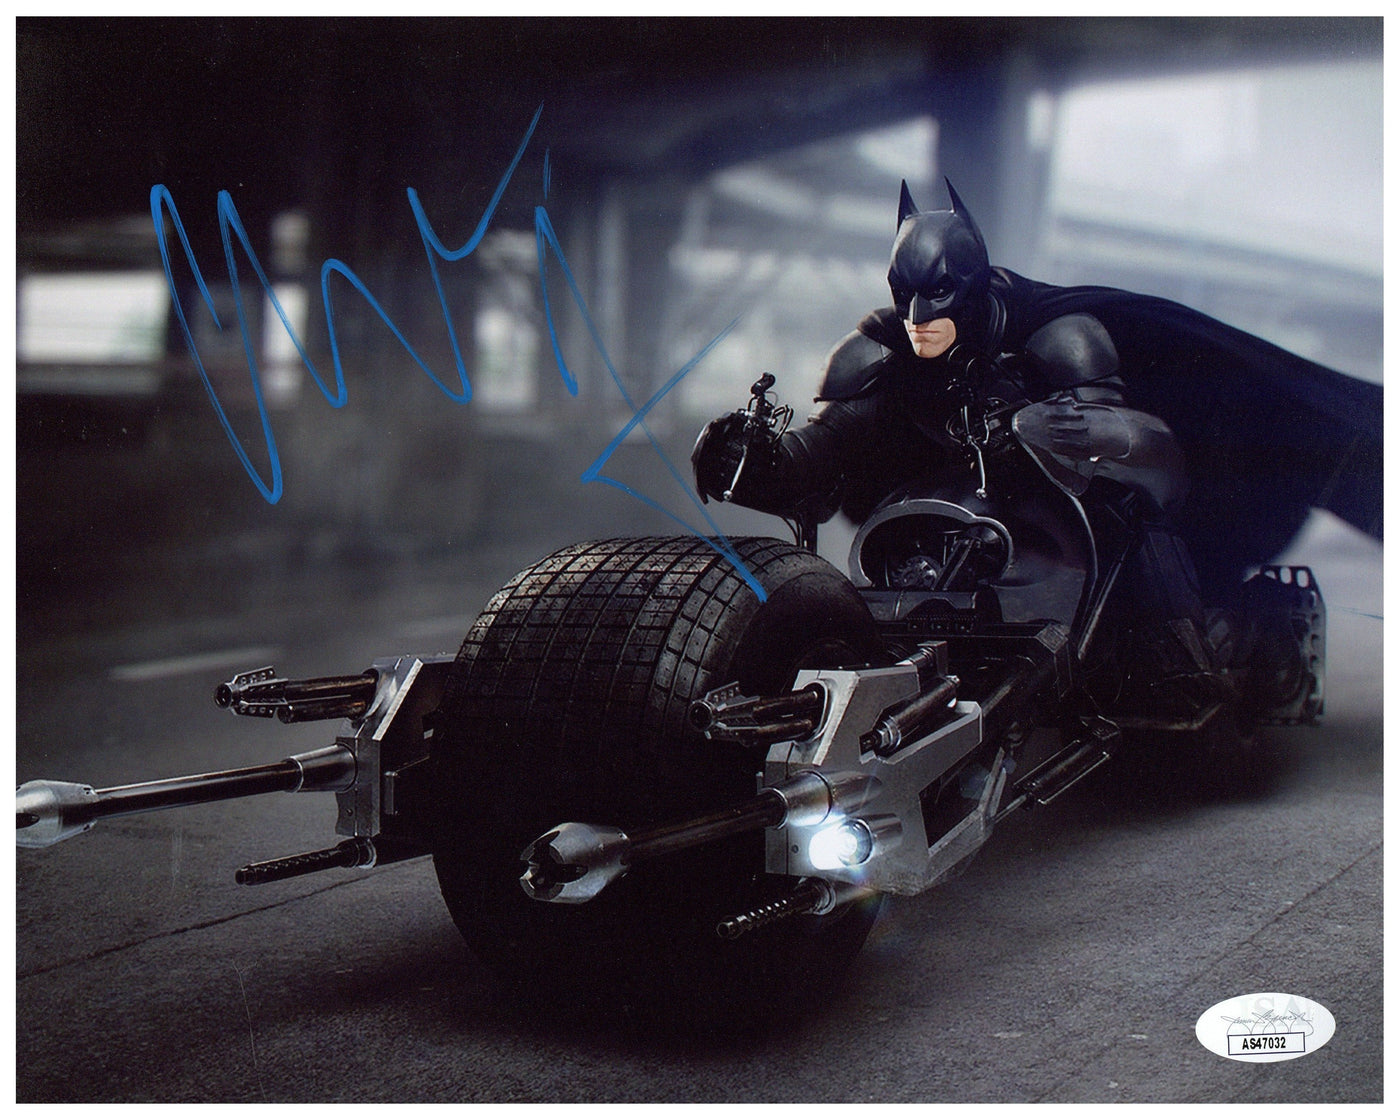 Christian Bale Signed 8x10 Photo The Dark Knight Batman Autographed JSA COA #4